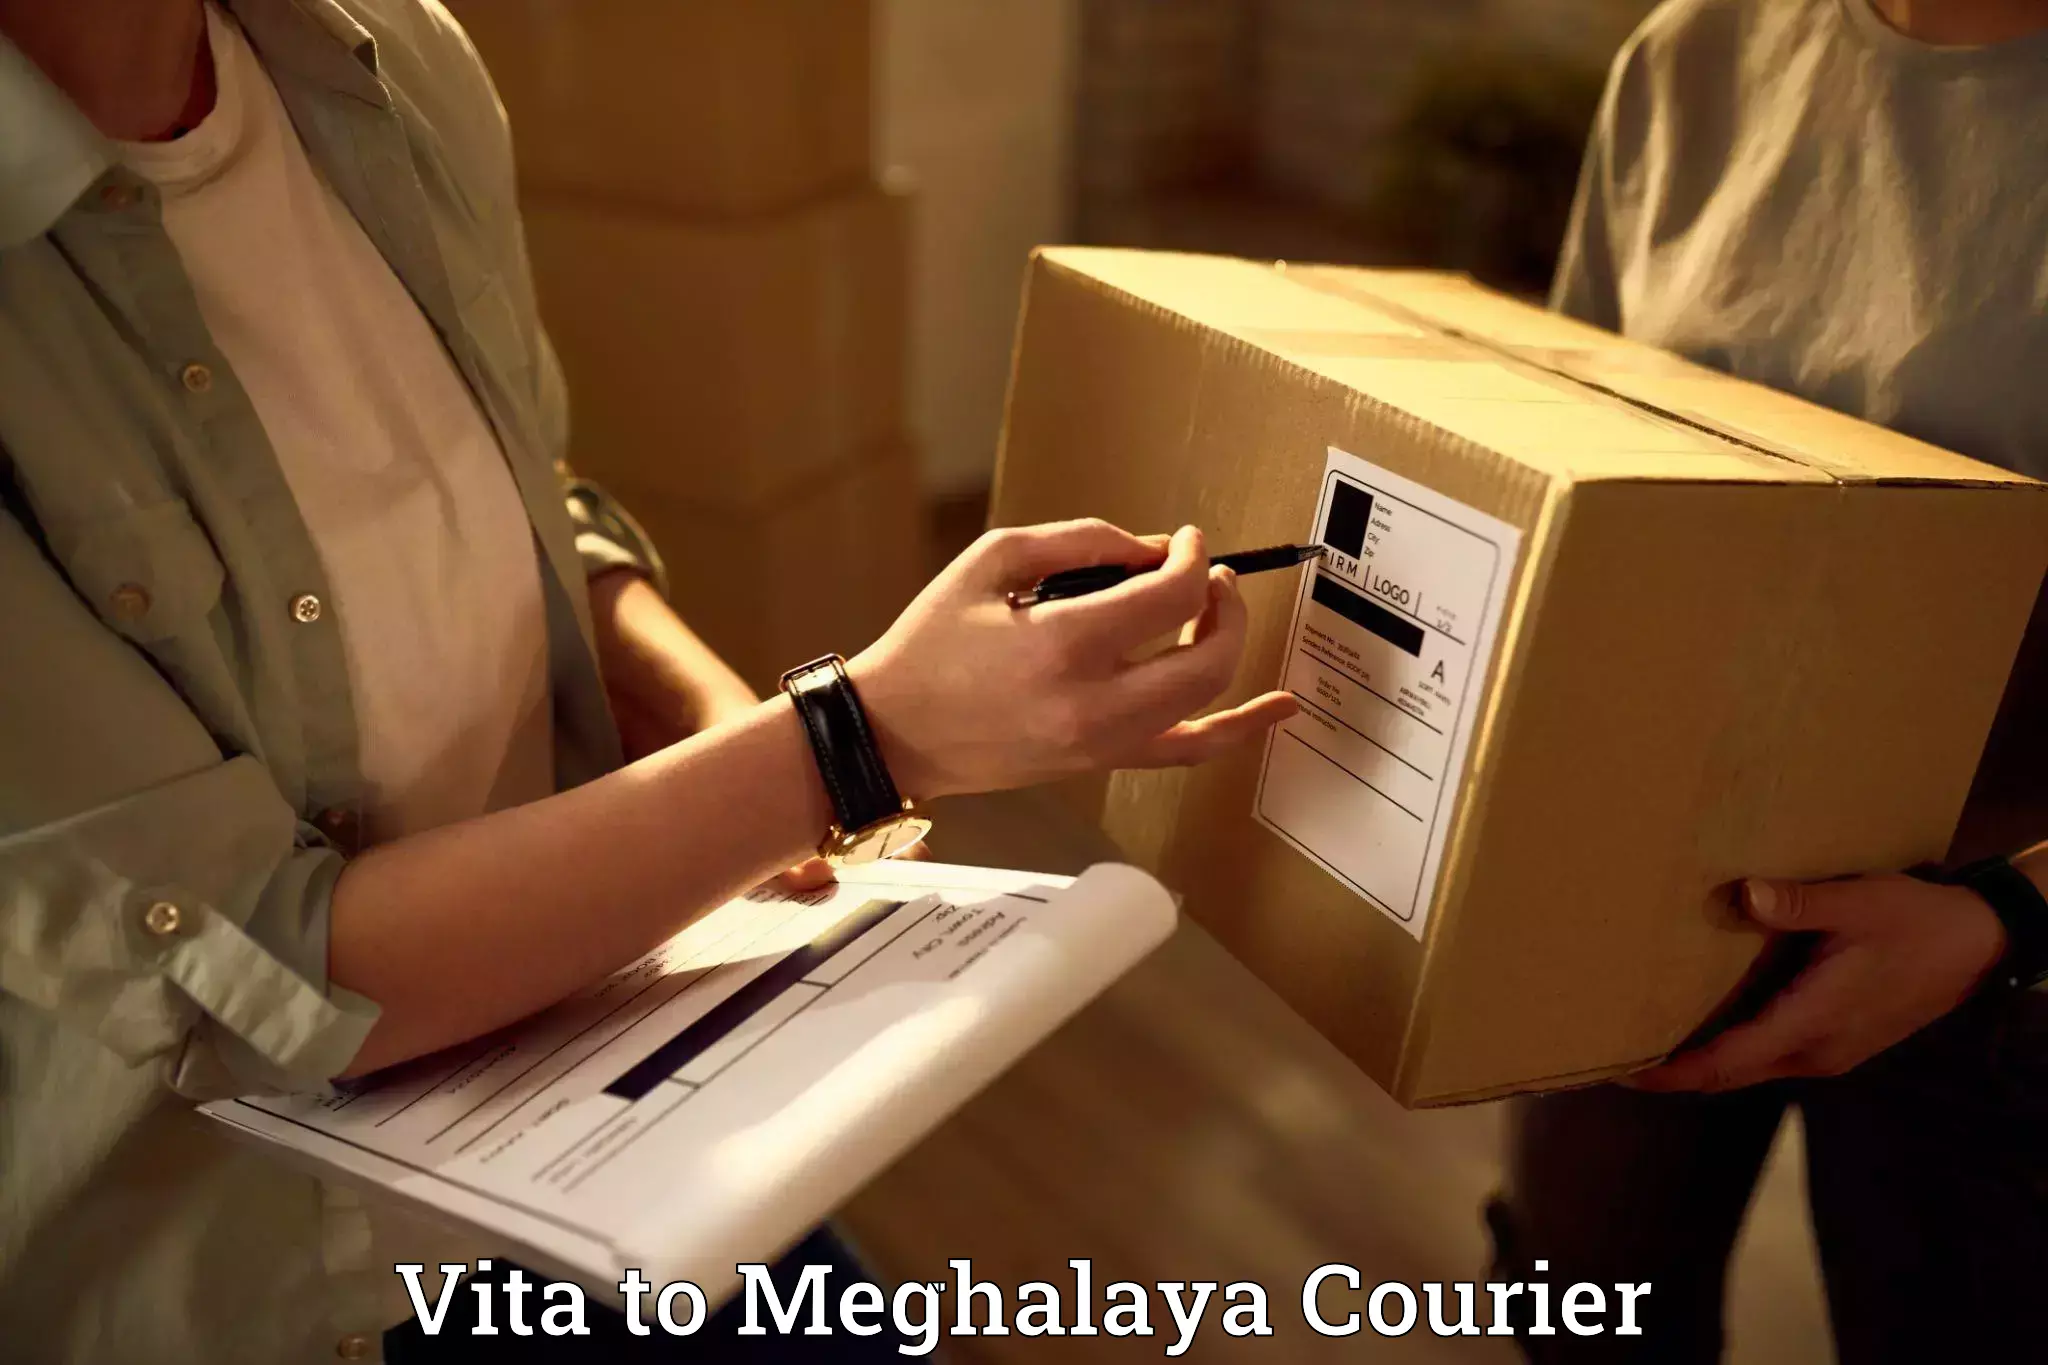 Furniture transport company Vita to Meghalaya